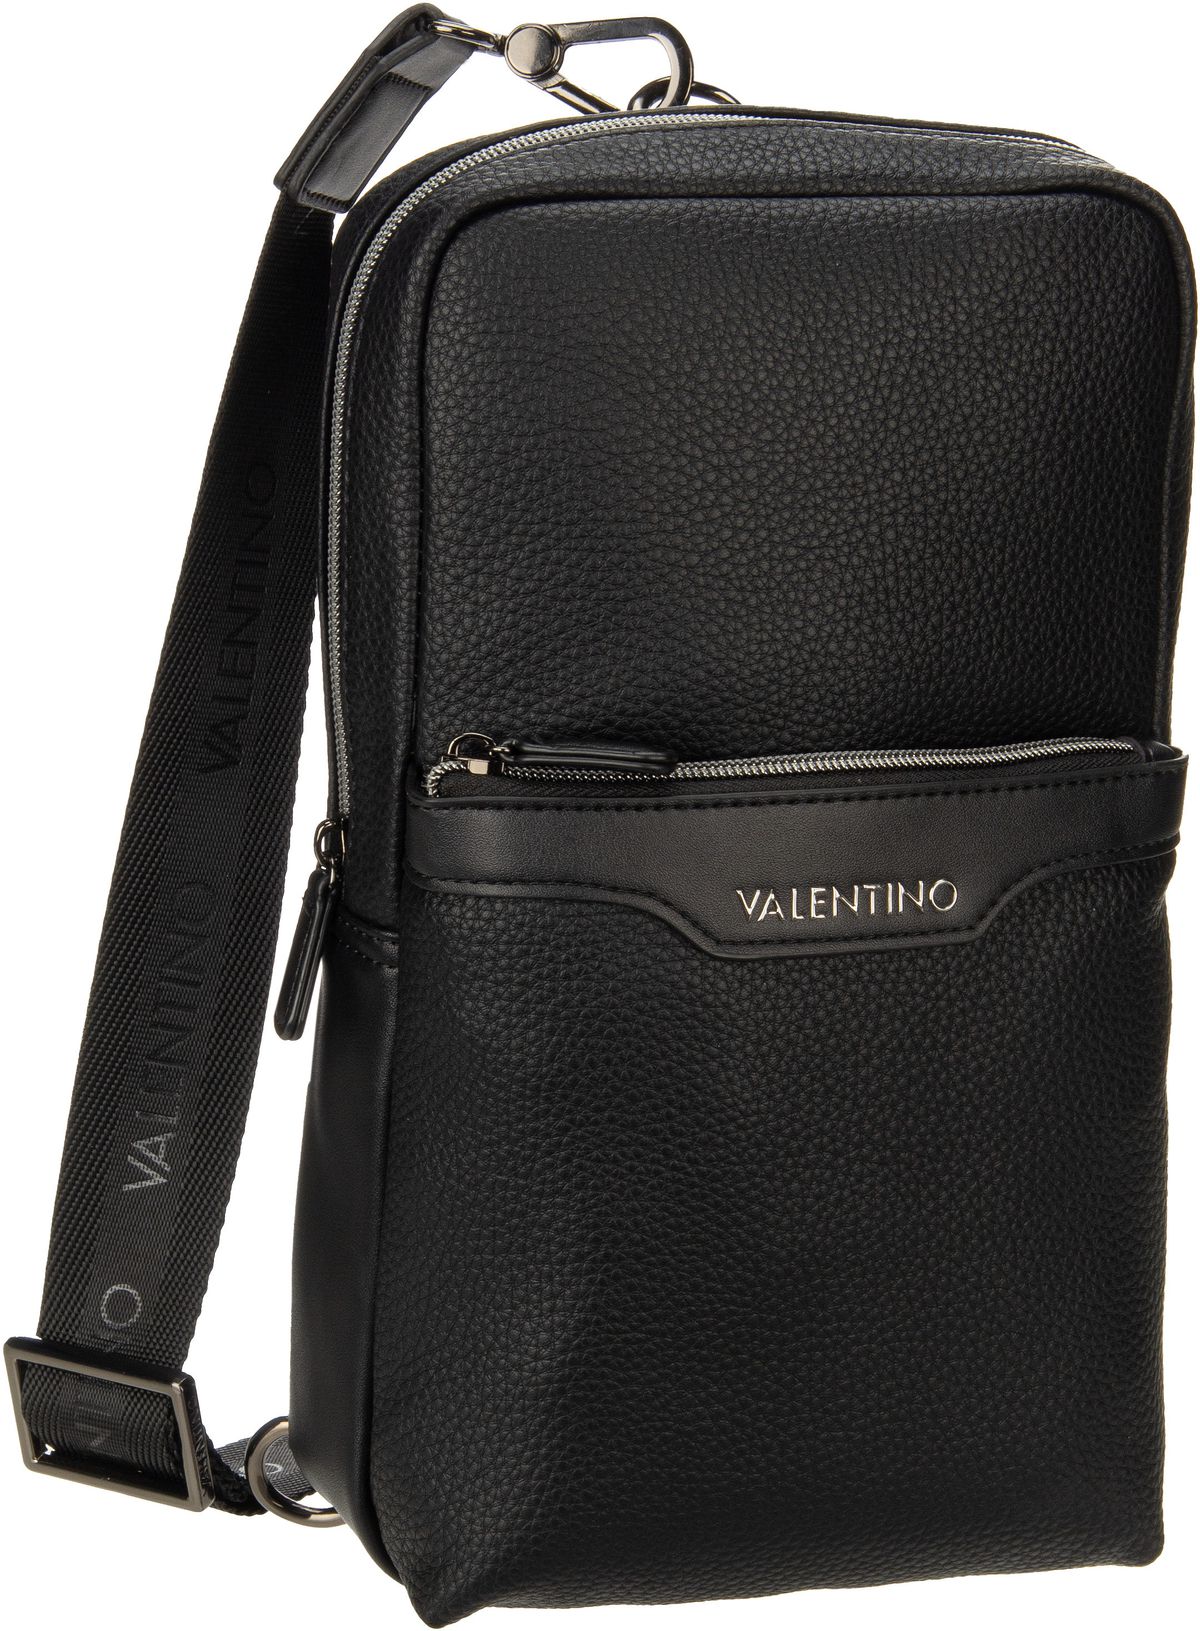 Valentino Efeo 918  in Schwarz (5 Liter), Sling Bag